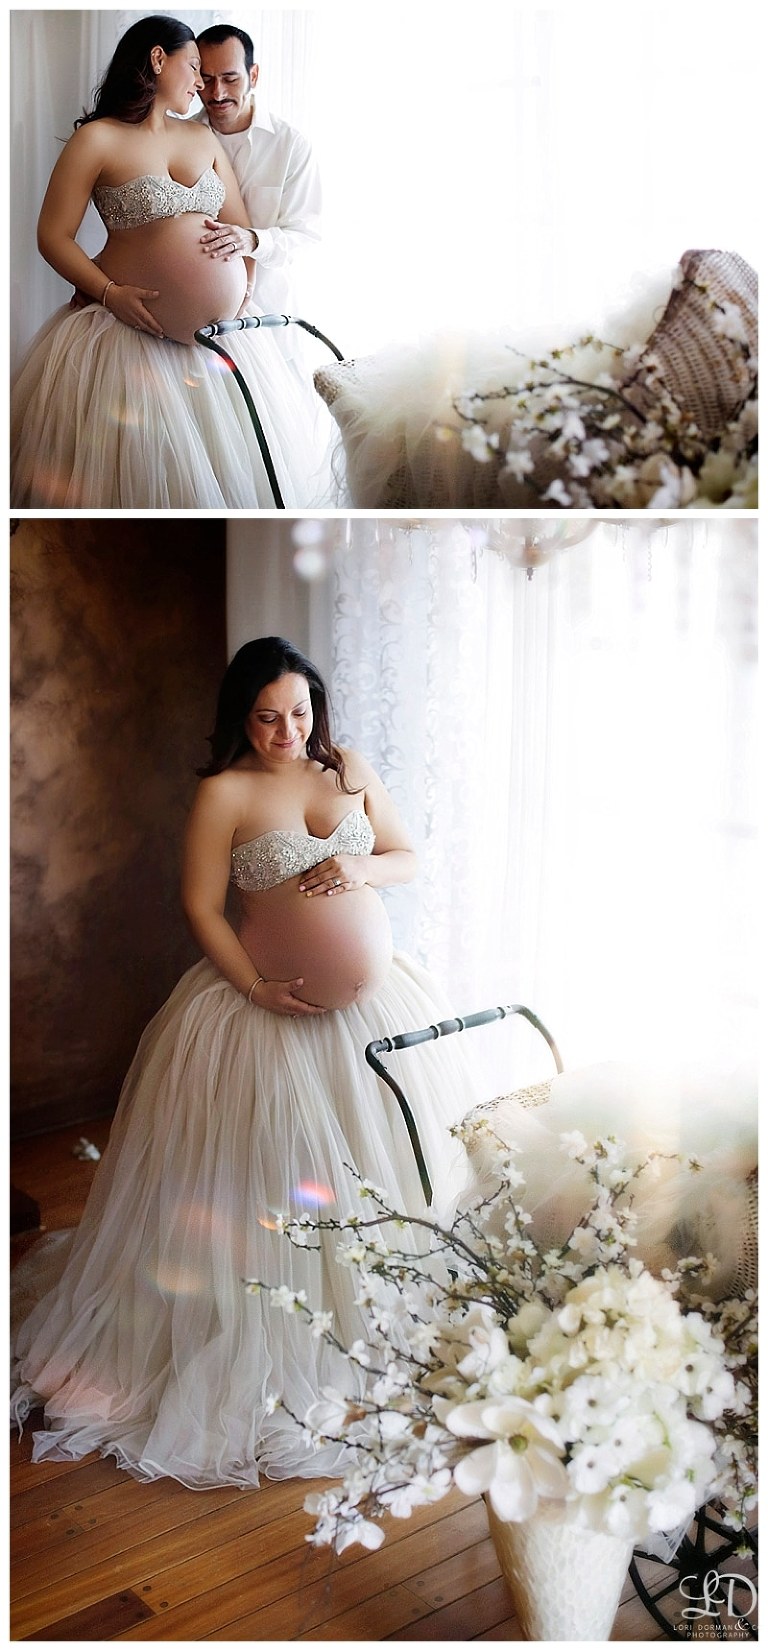 sweet maternity photoshoot-maternity photography-lori dorman photography_1038.jpg